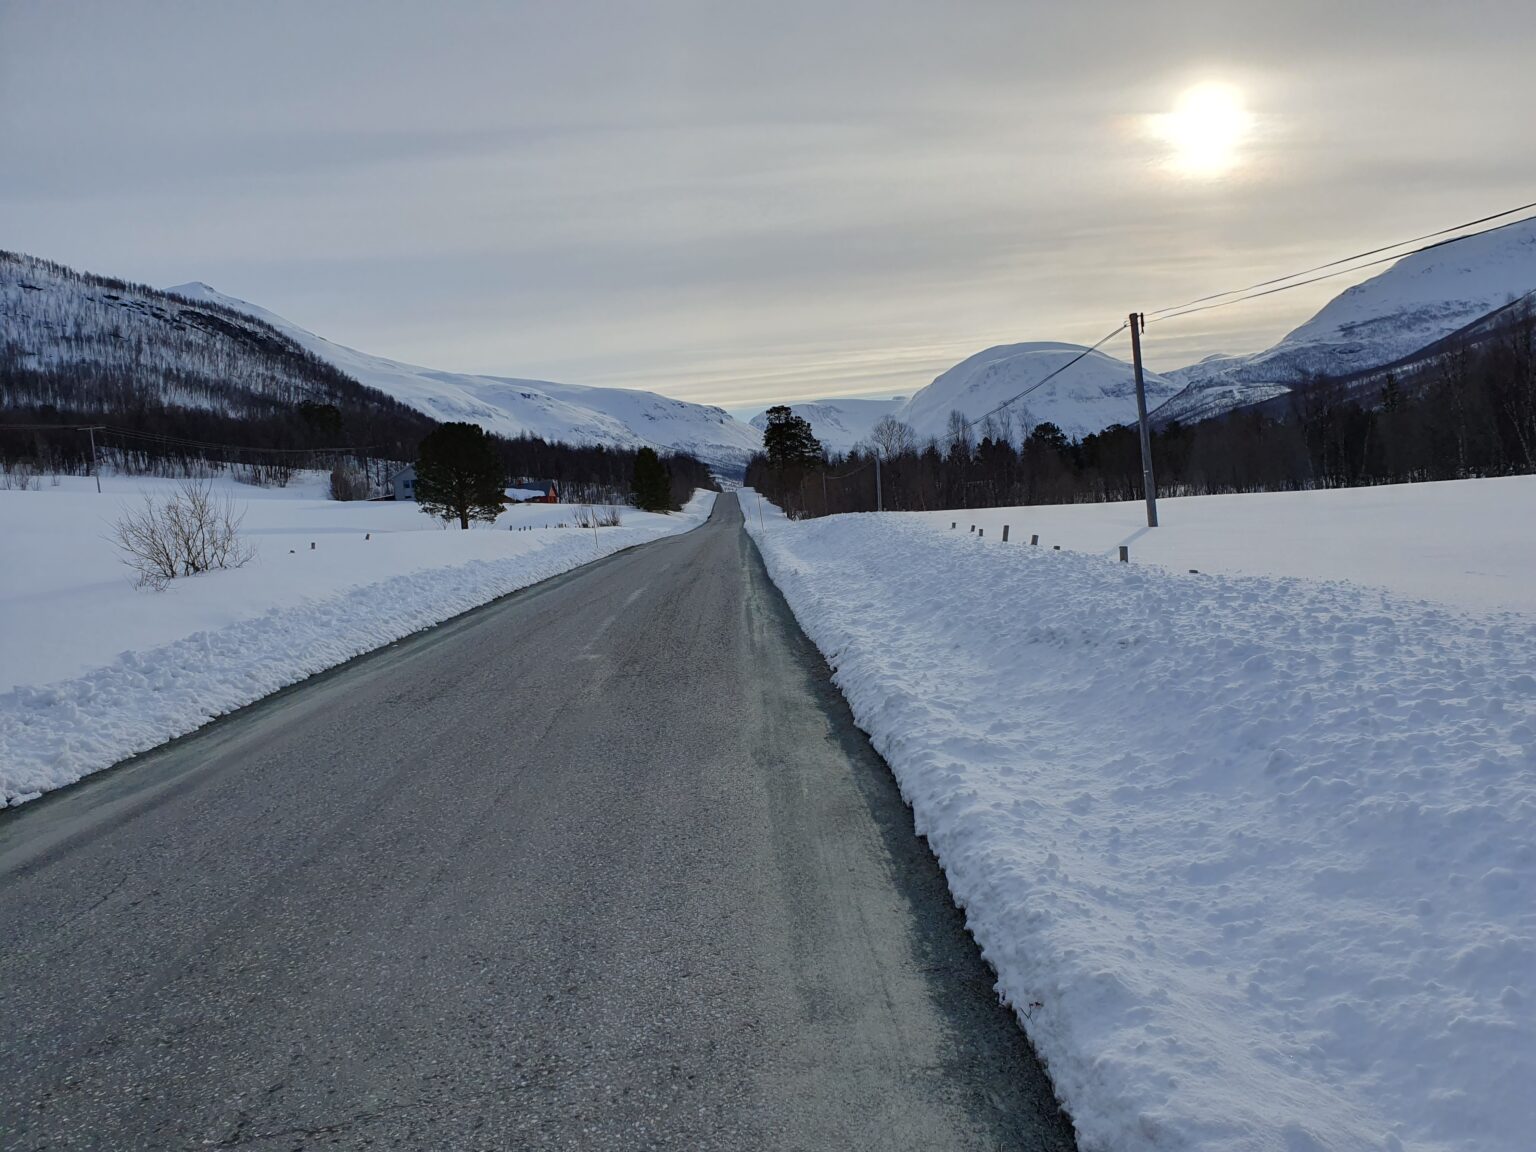 Walking down the Tamokdalen road